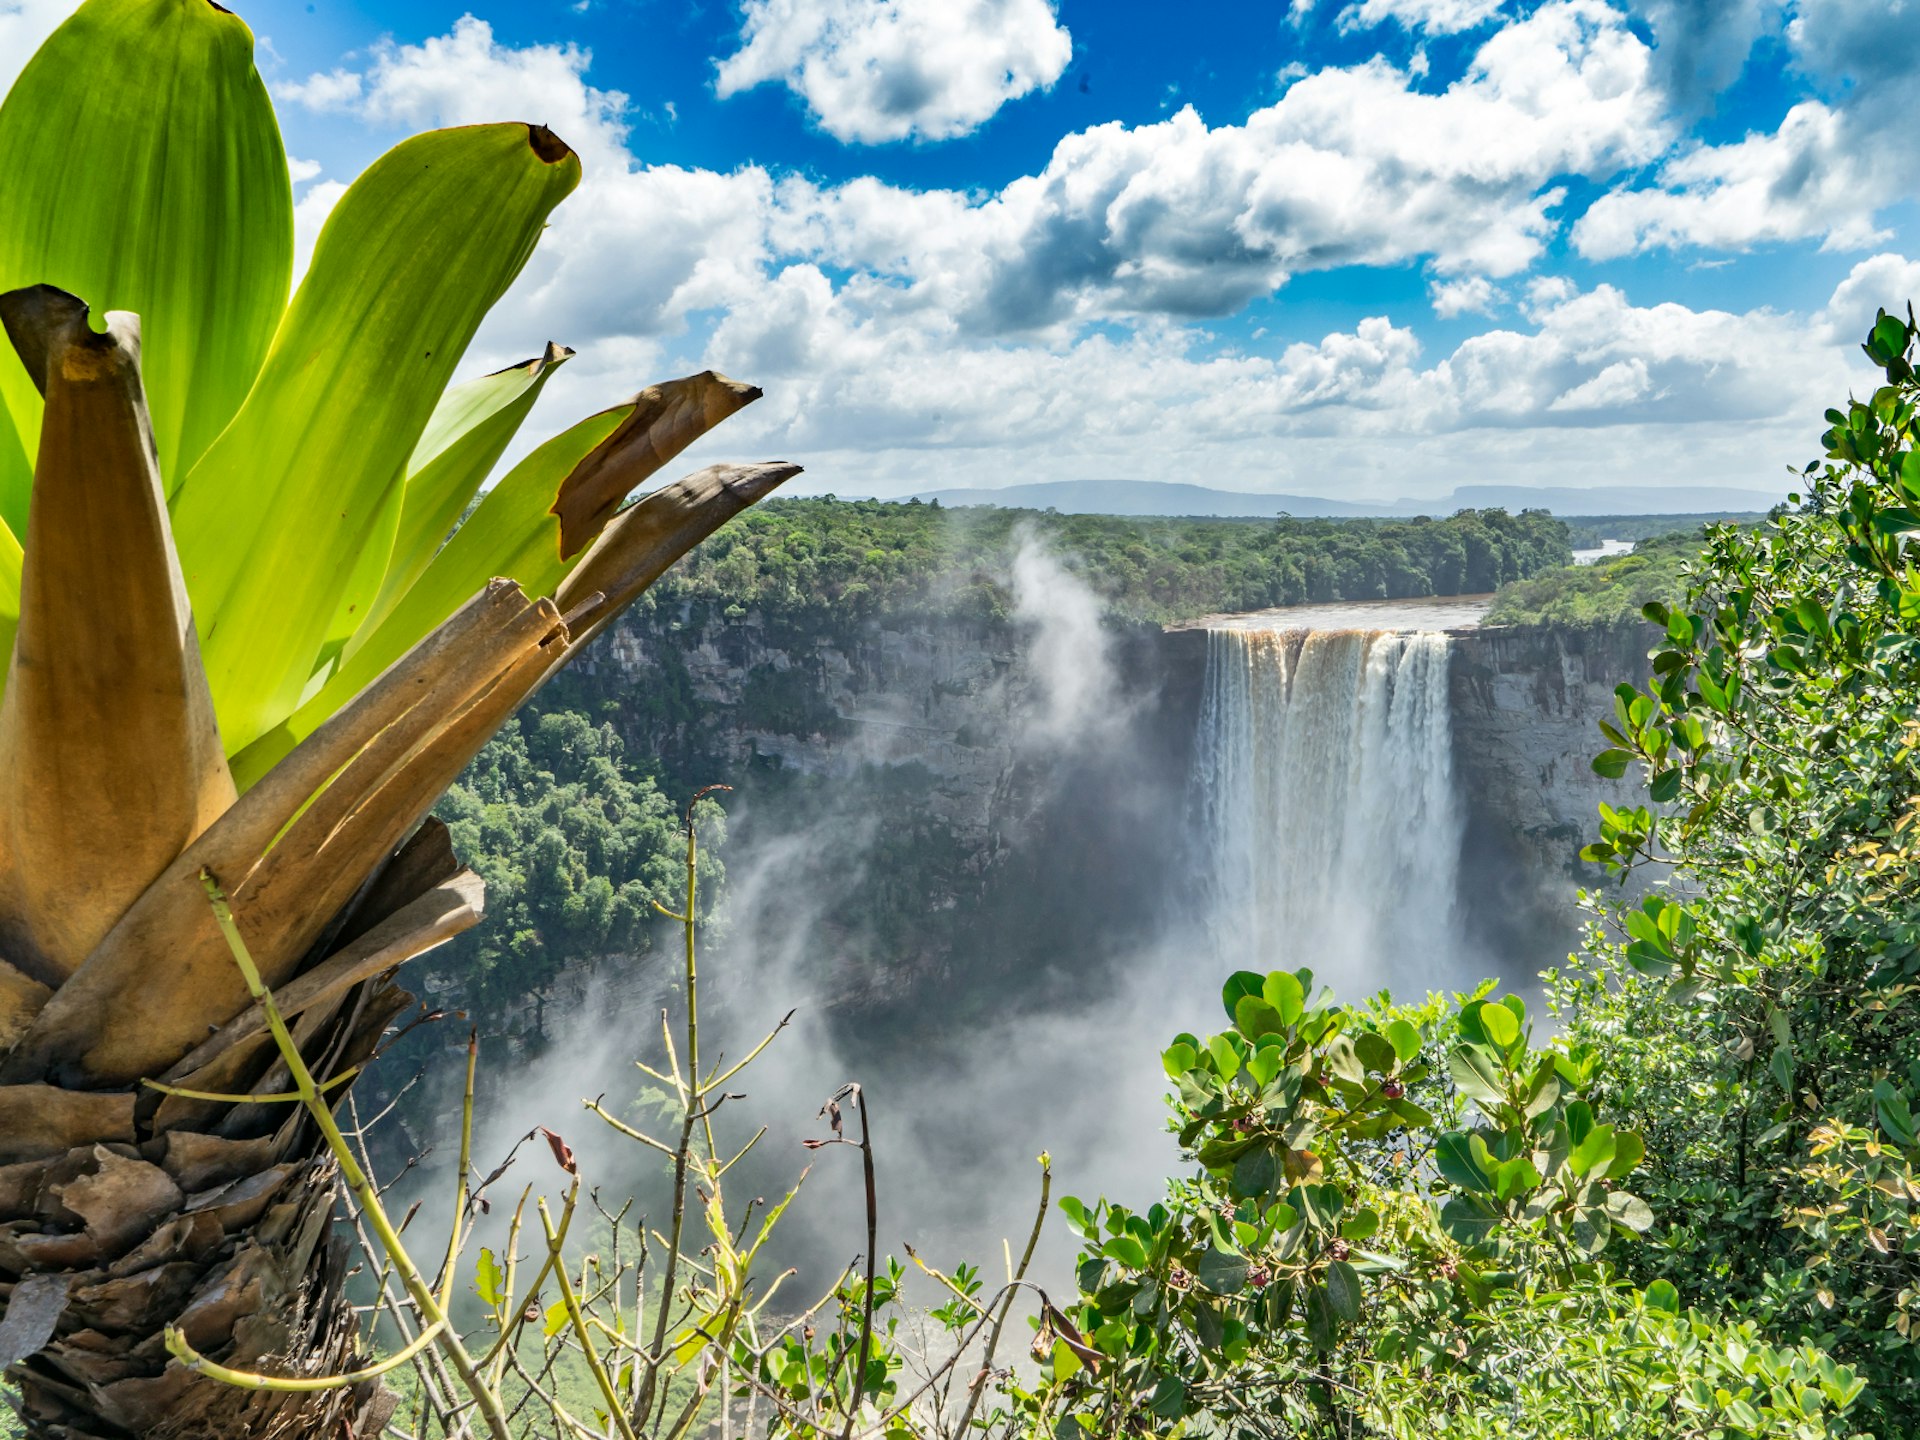 Guyana's Kaieteur Falls